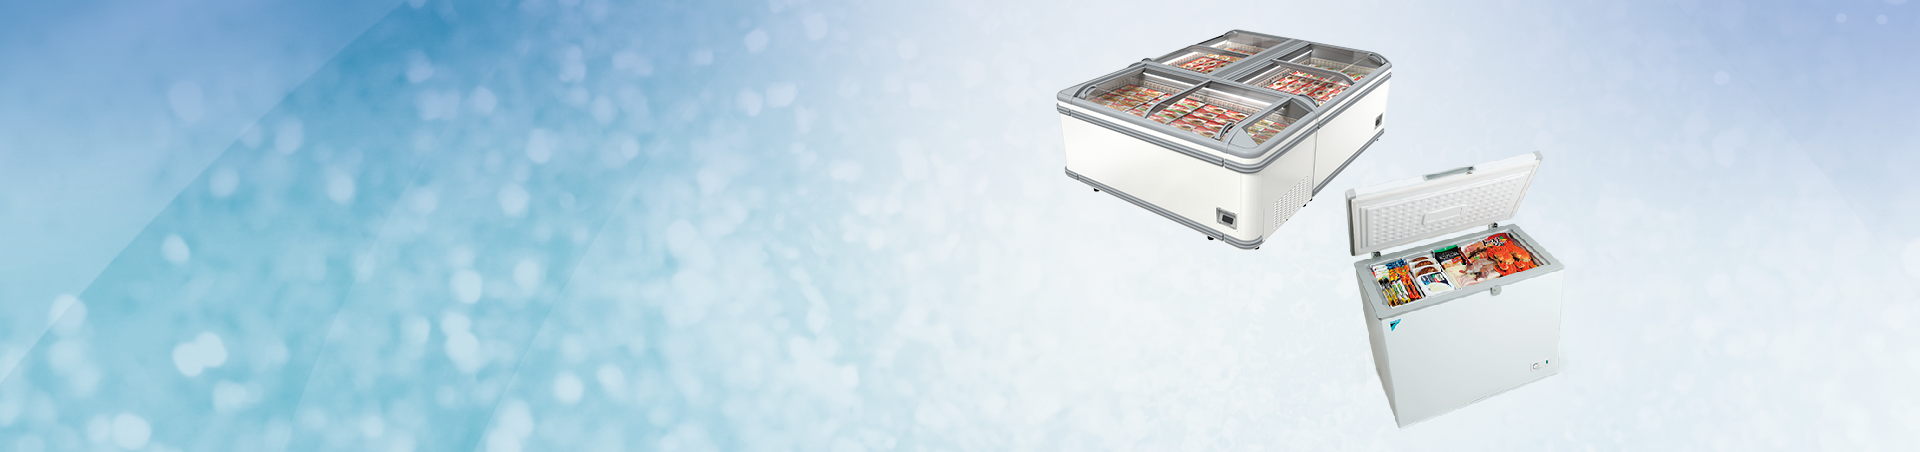 LTFMG210A ダイキン 冷凍プラグインショーケース MILANO スライド扉 片面タイプ 782リットル 7尺相当 冷蔵庫・冷凍庫